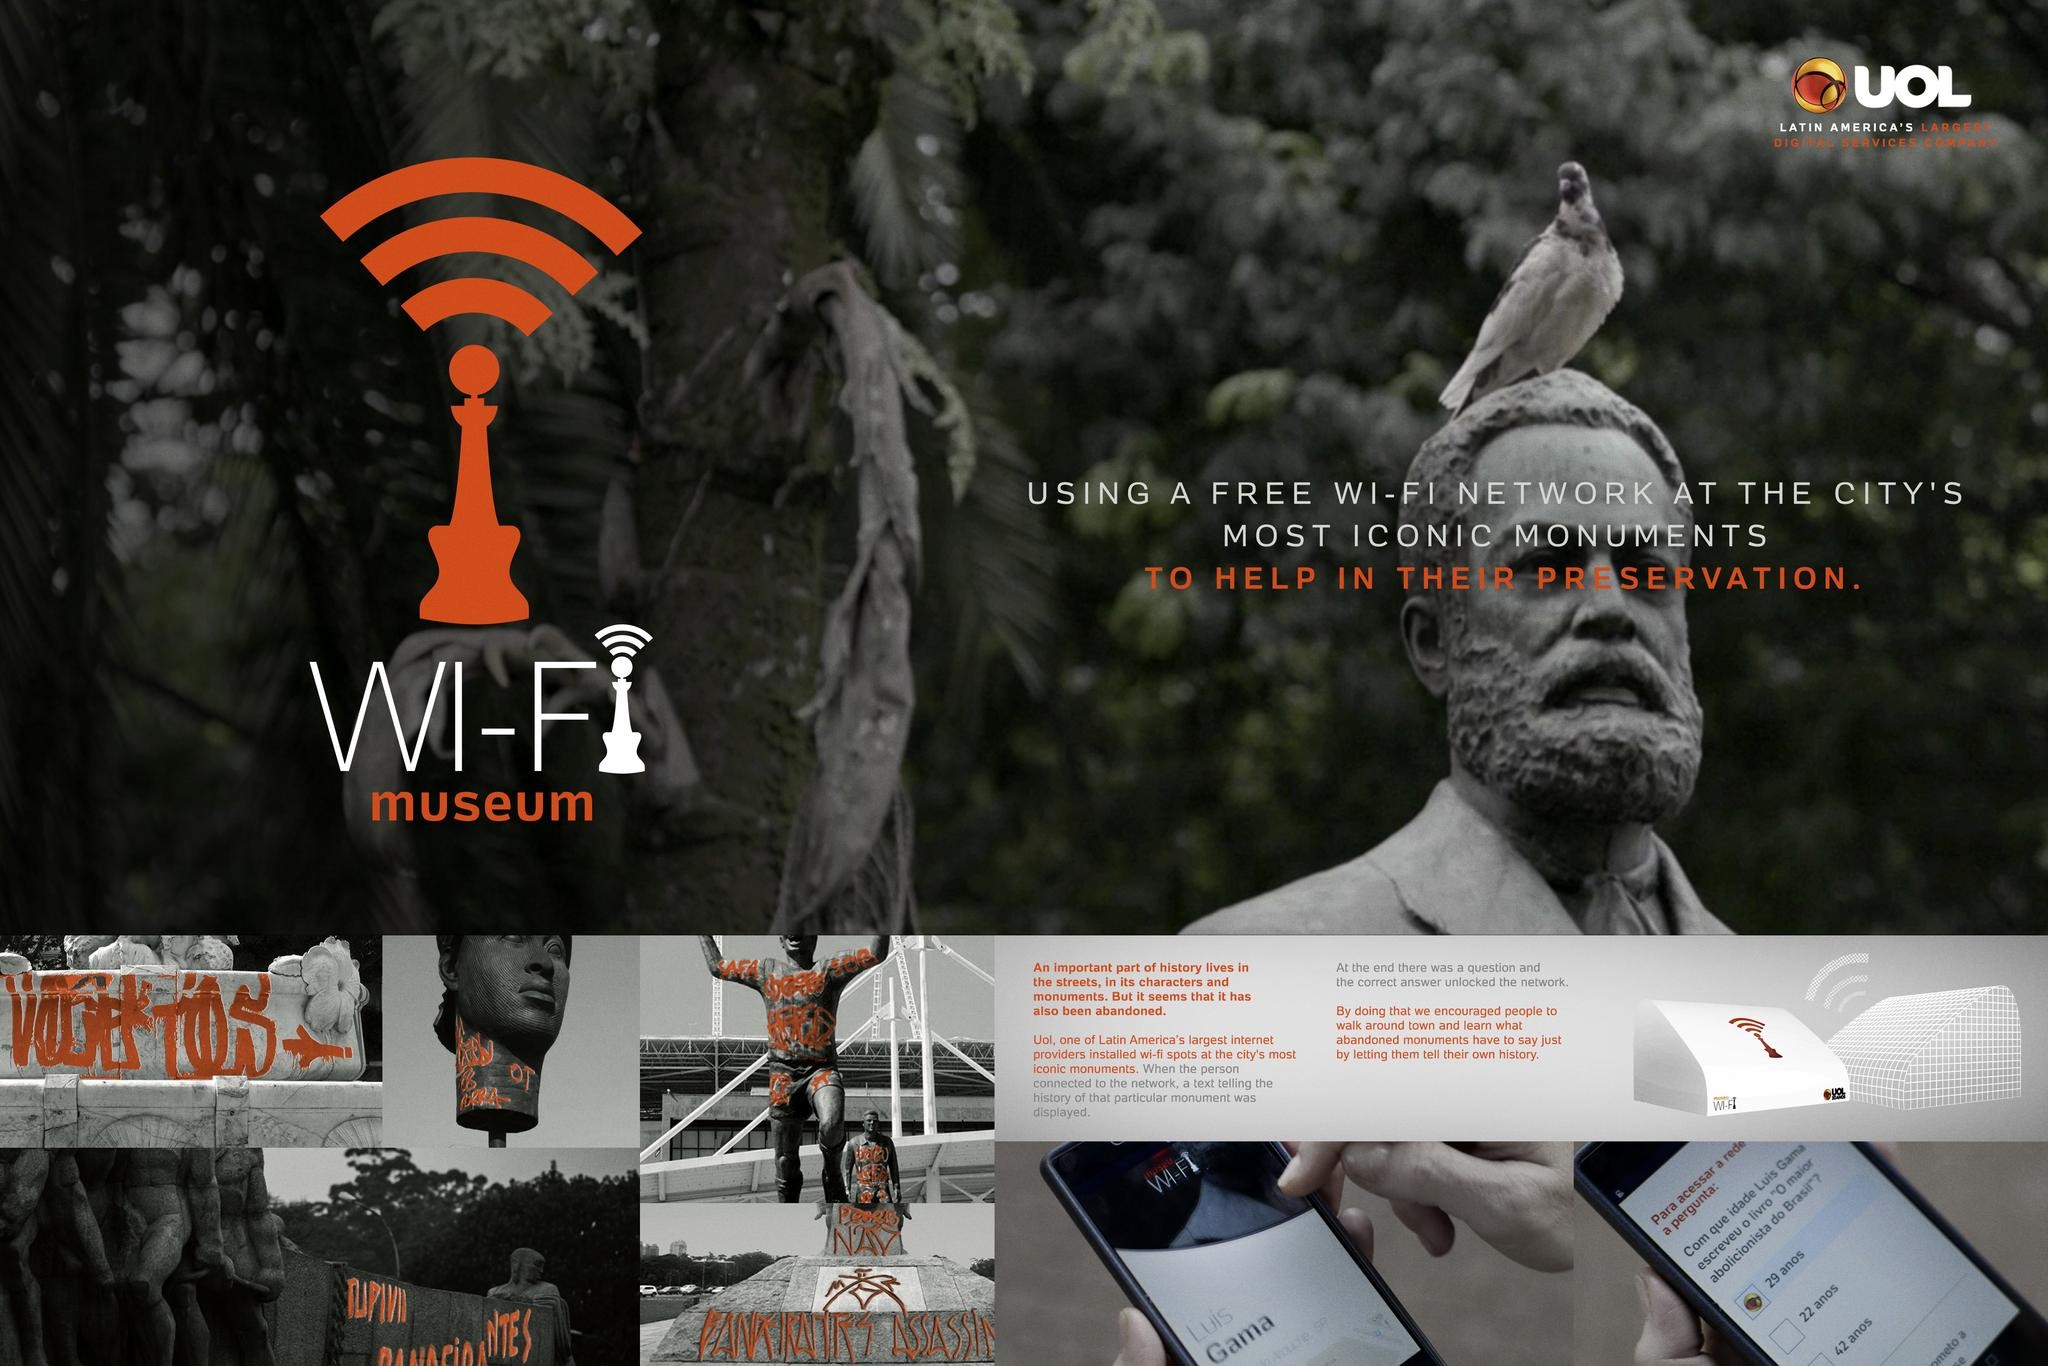 Wi-Fi Museum